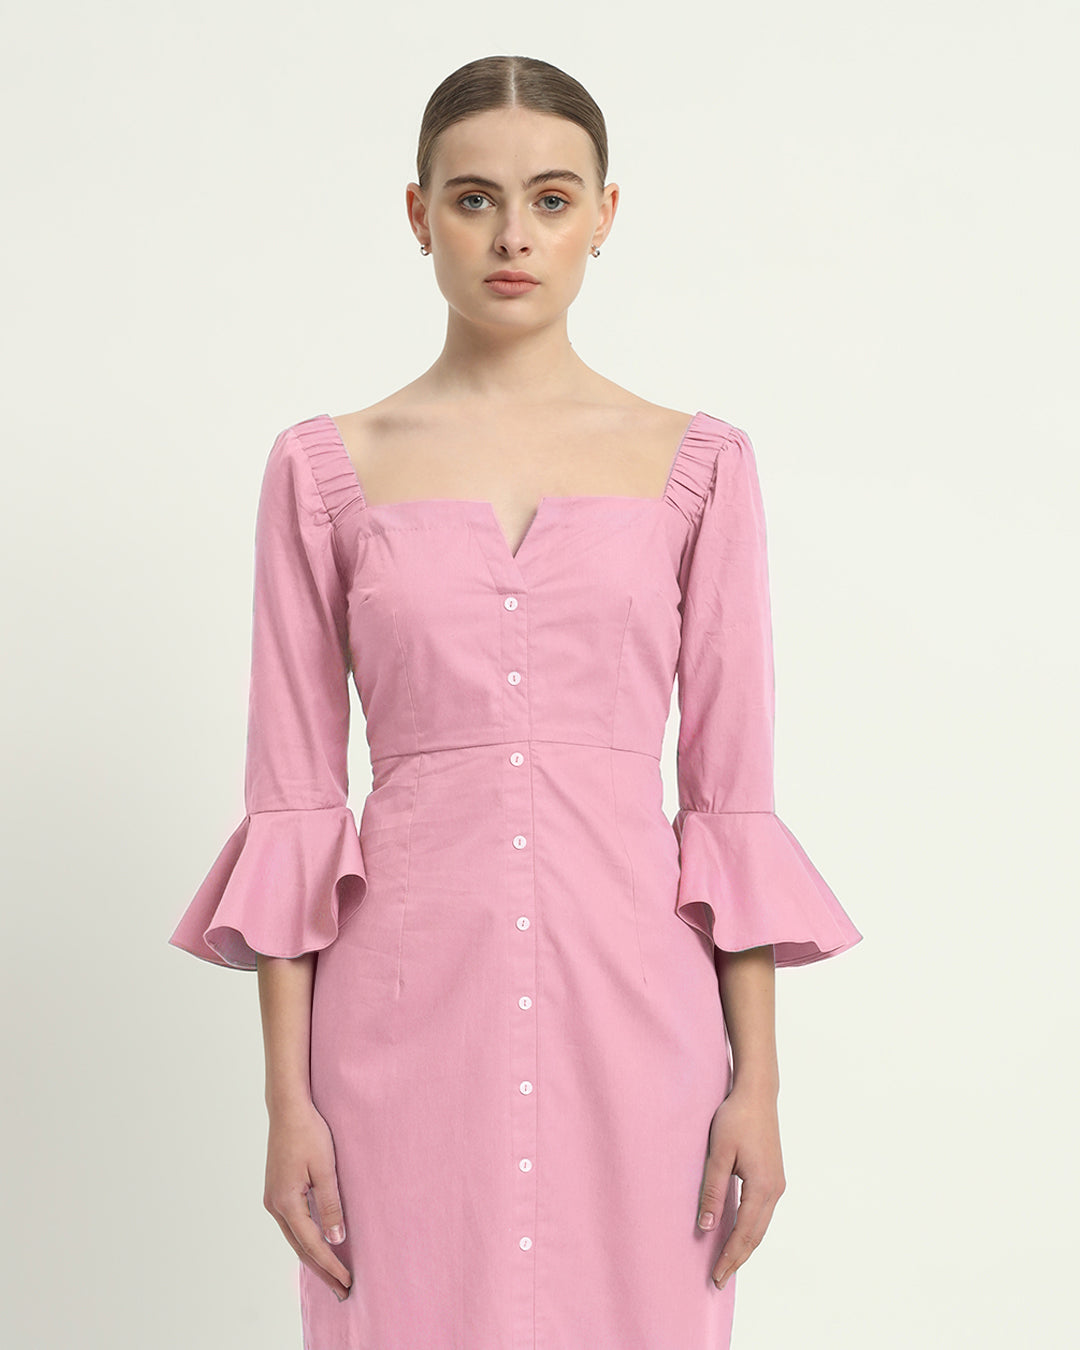 The Fondant Pink Rosendale Cotton Dress